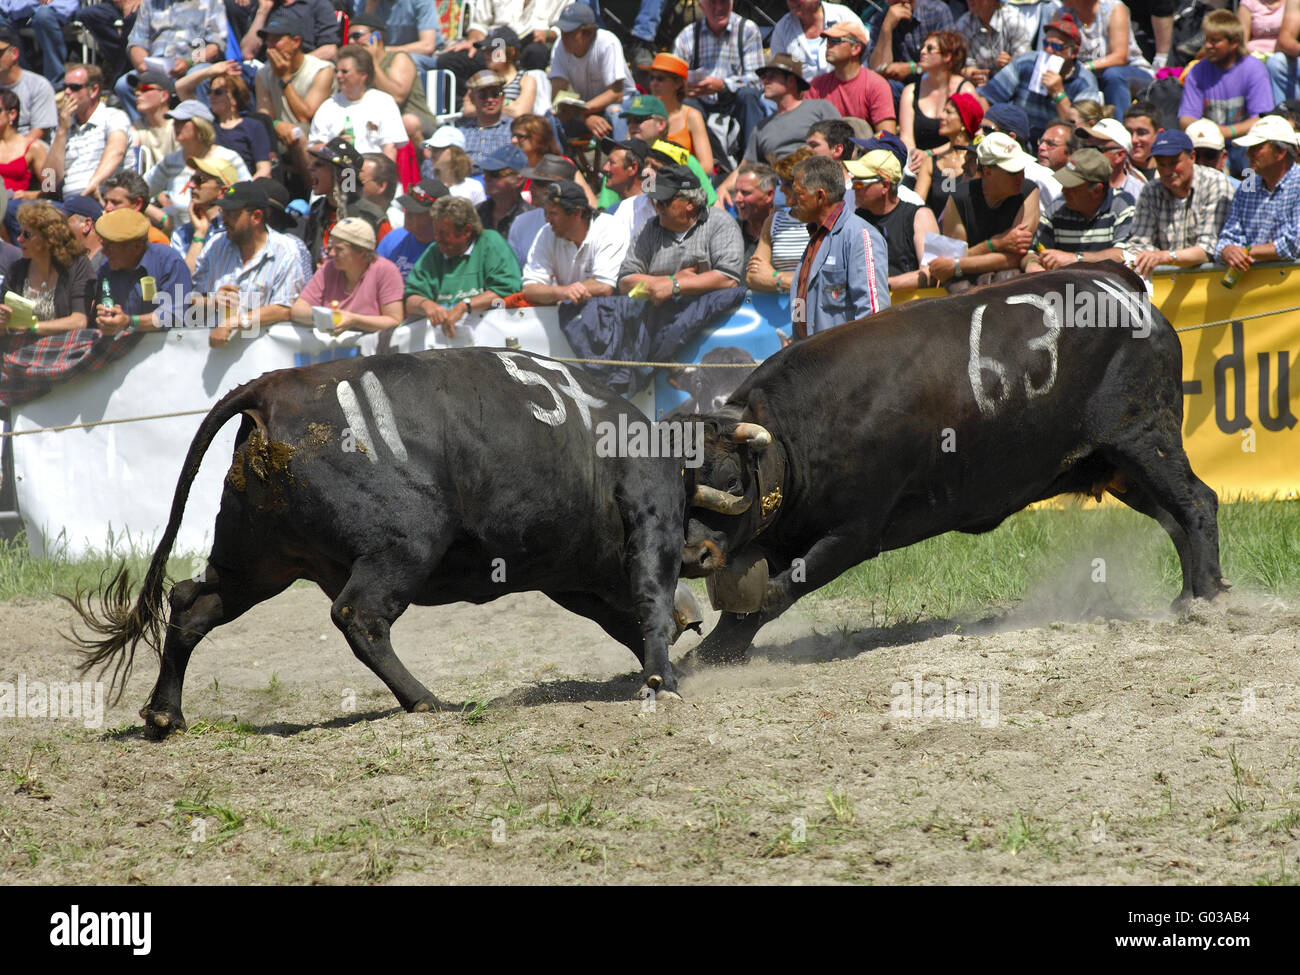 Herens kämpfende Kühe im Ring, Schweiz Stockfotografie - Alamy